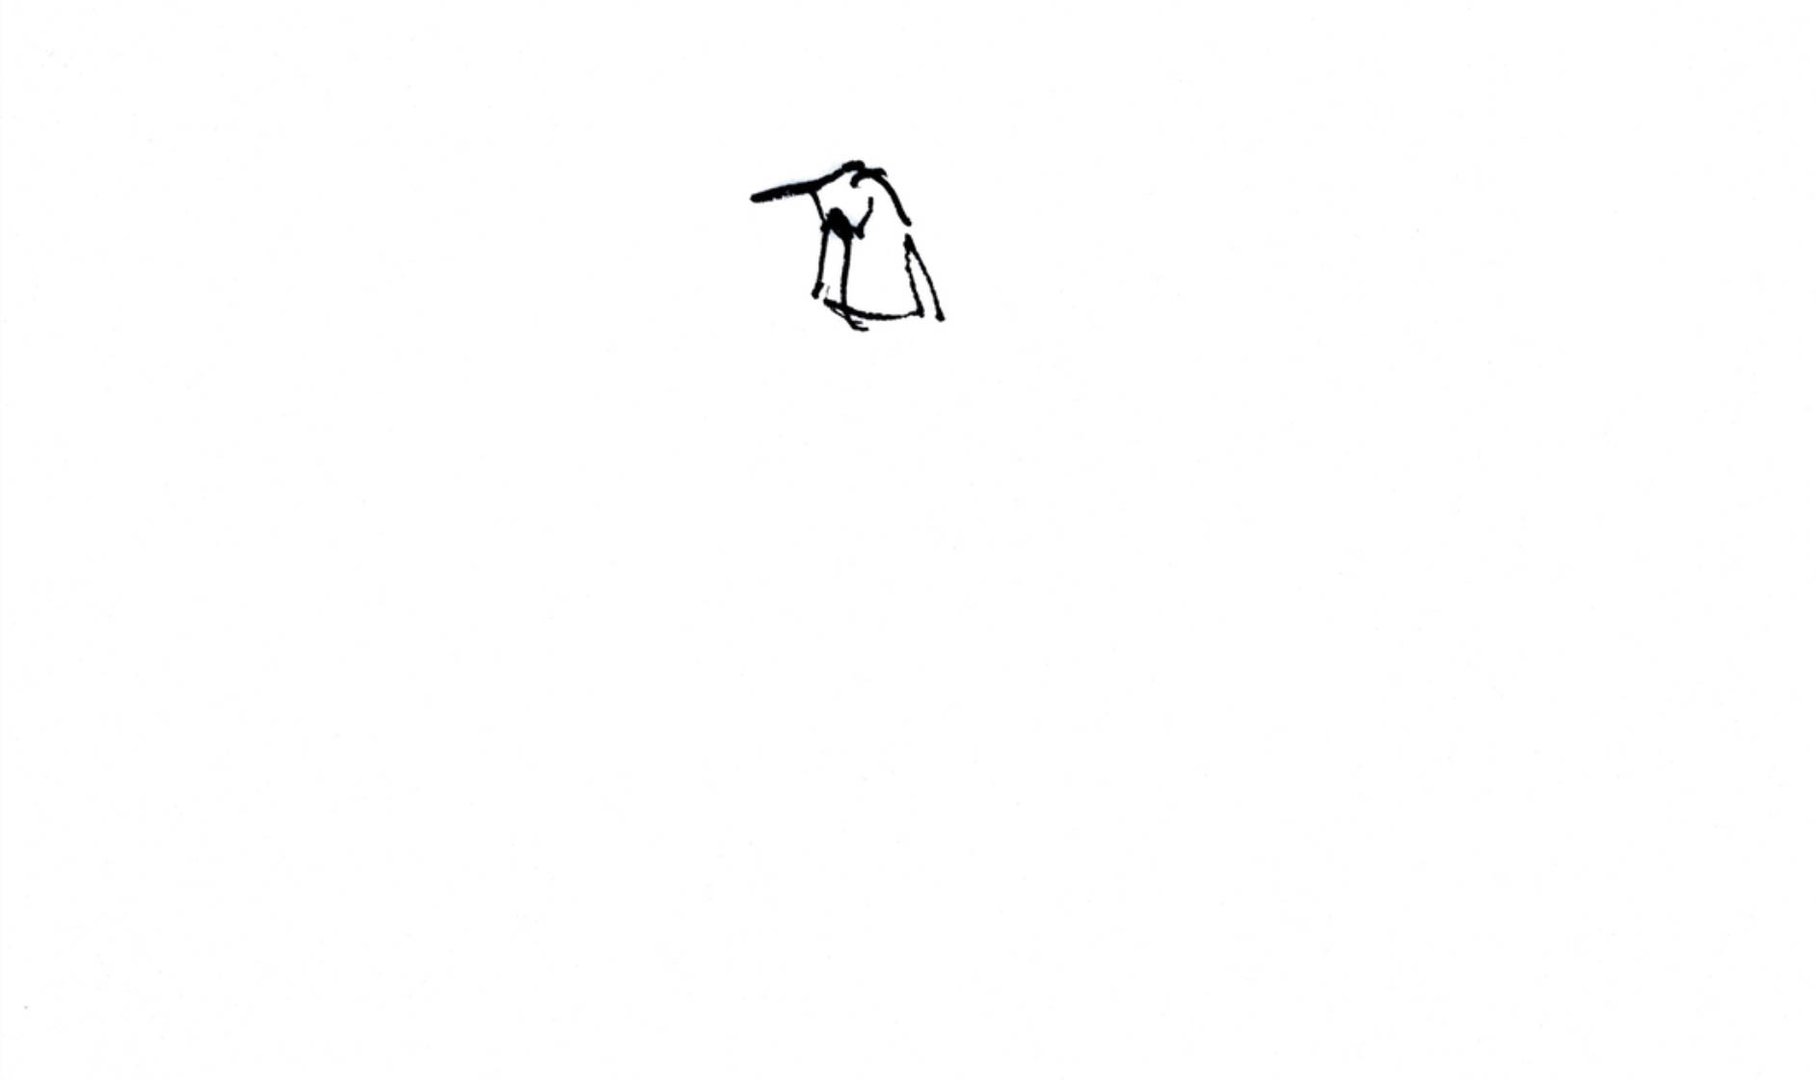 Distant bird in black on white systems6.jpg